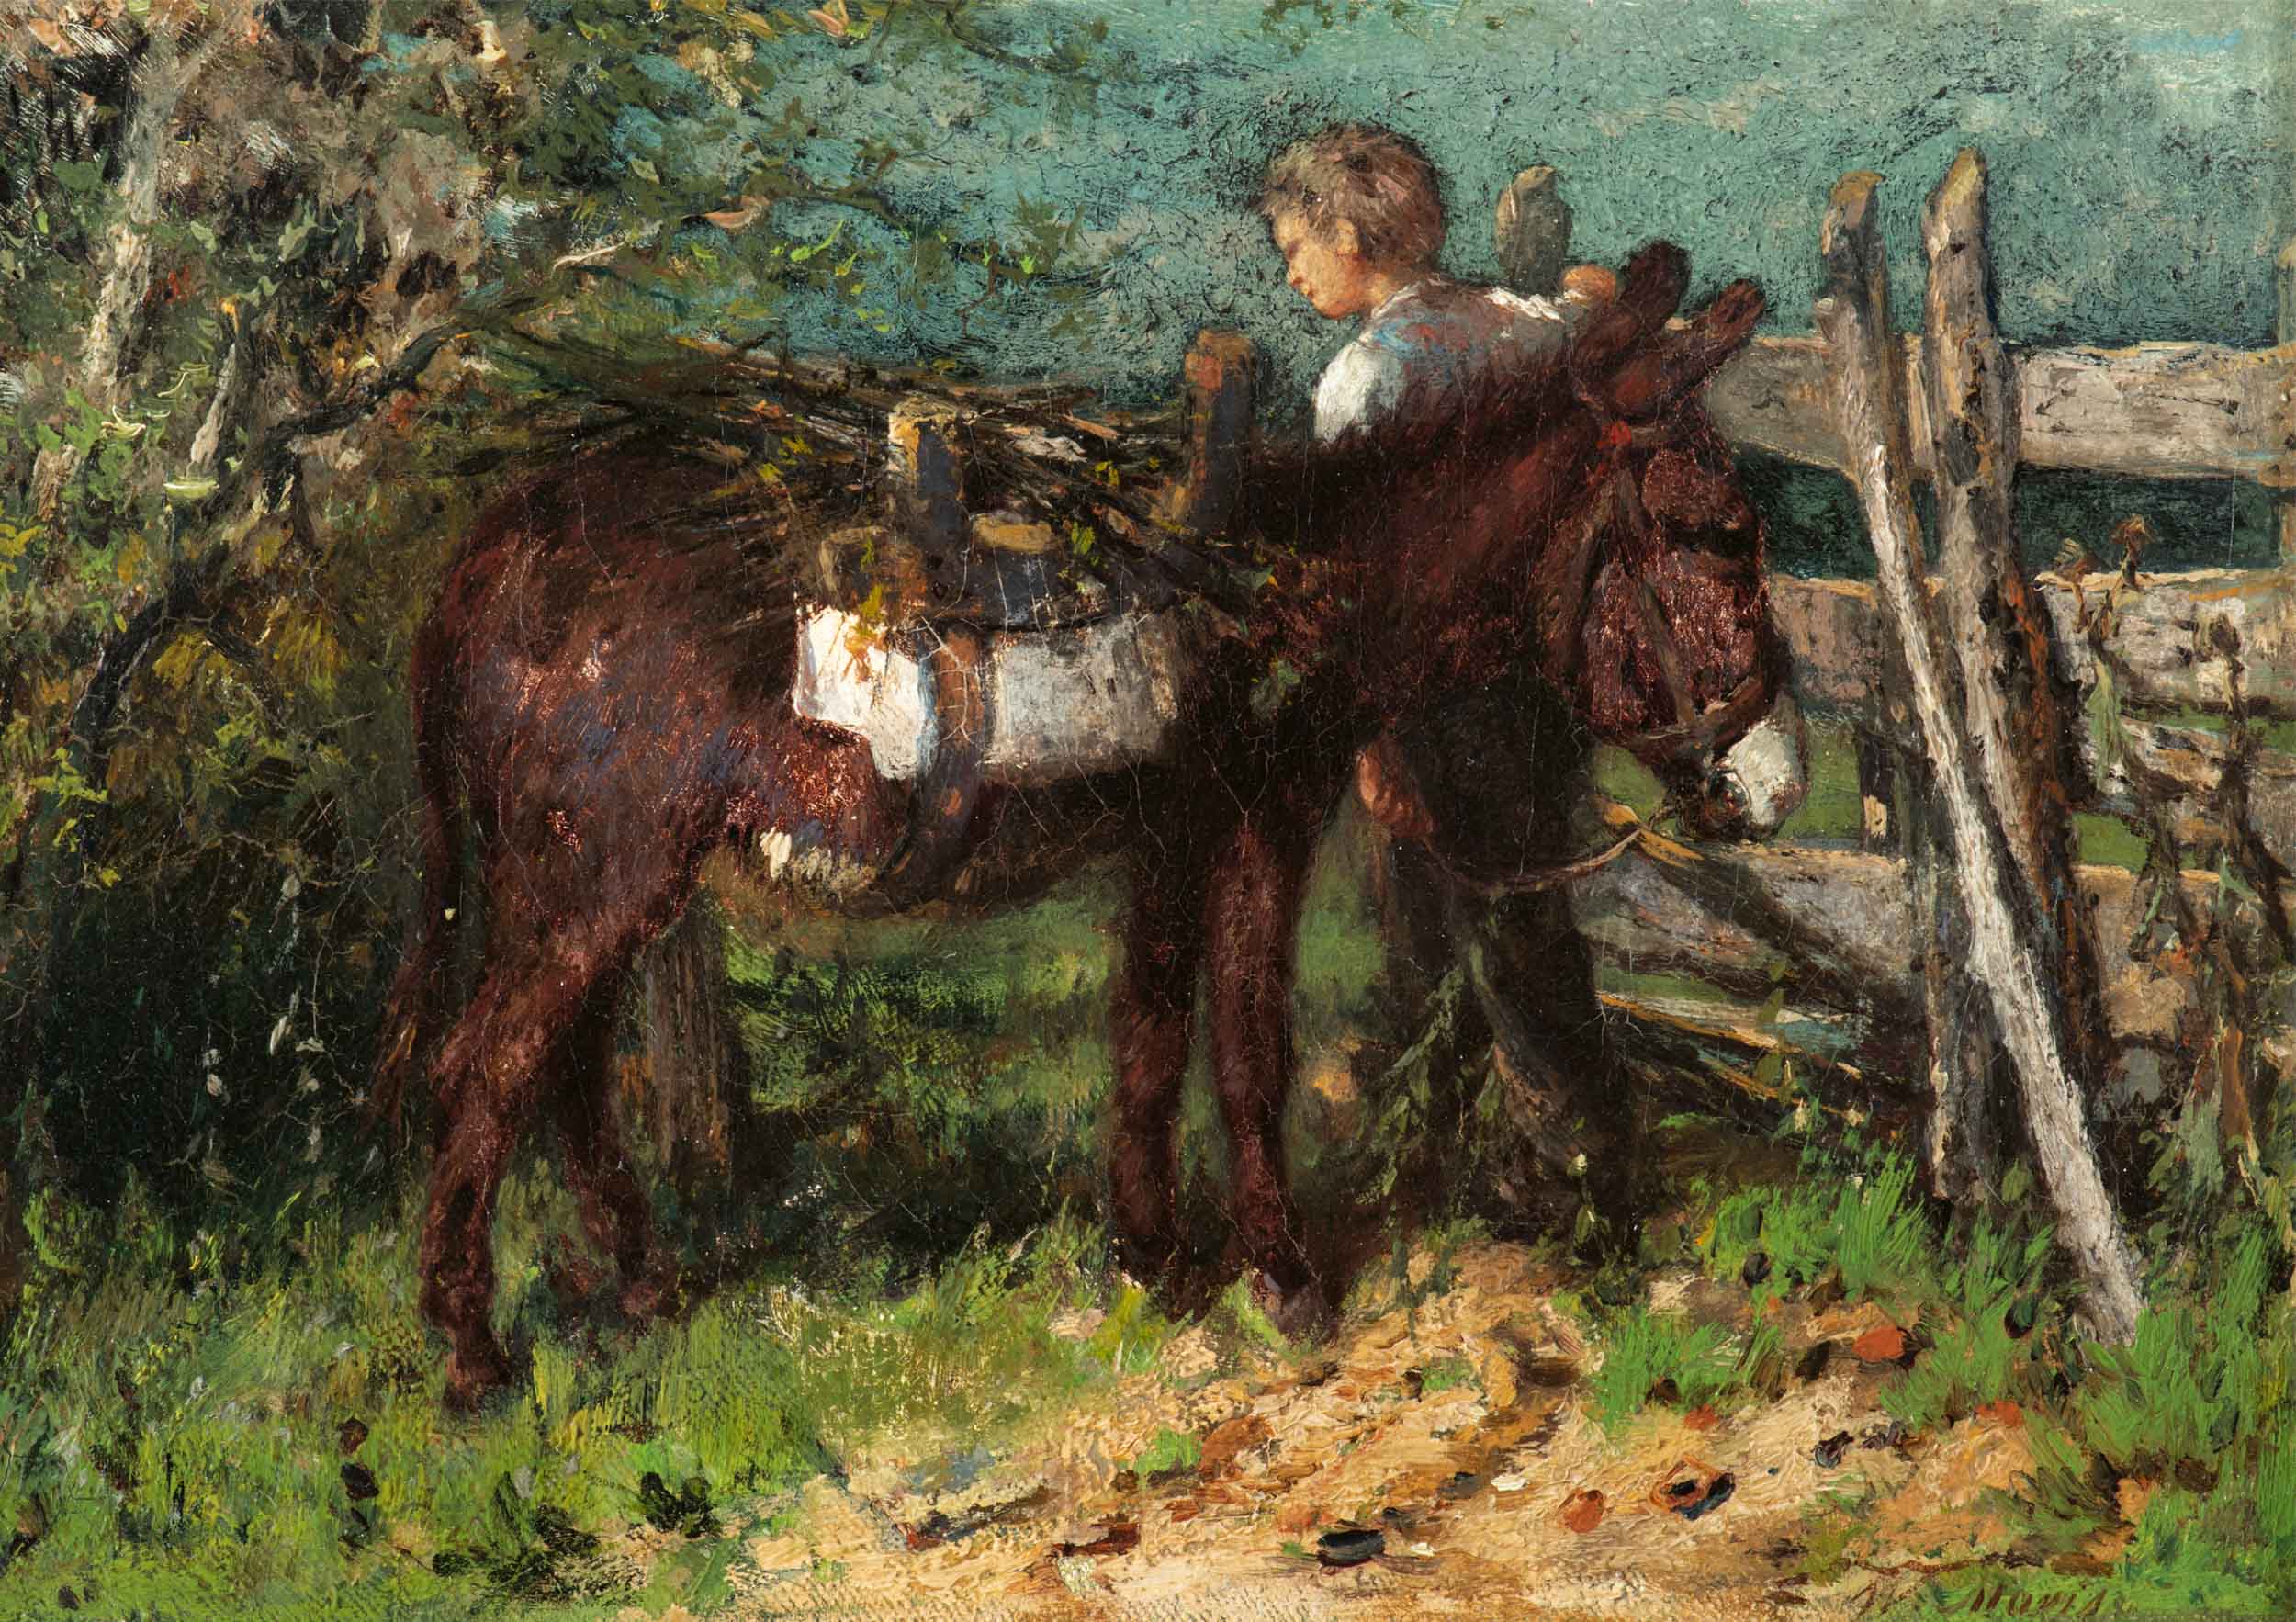 Boy gathering wood with his donkey